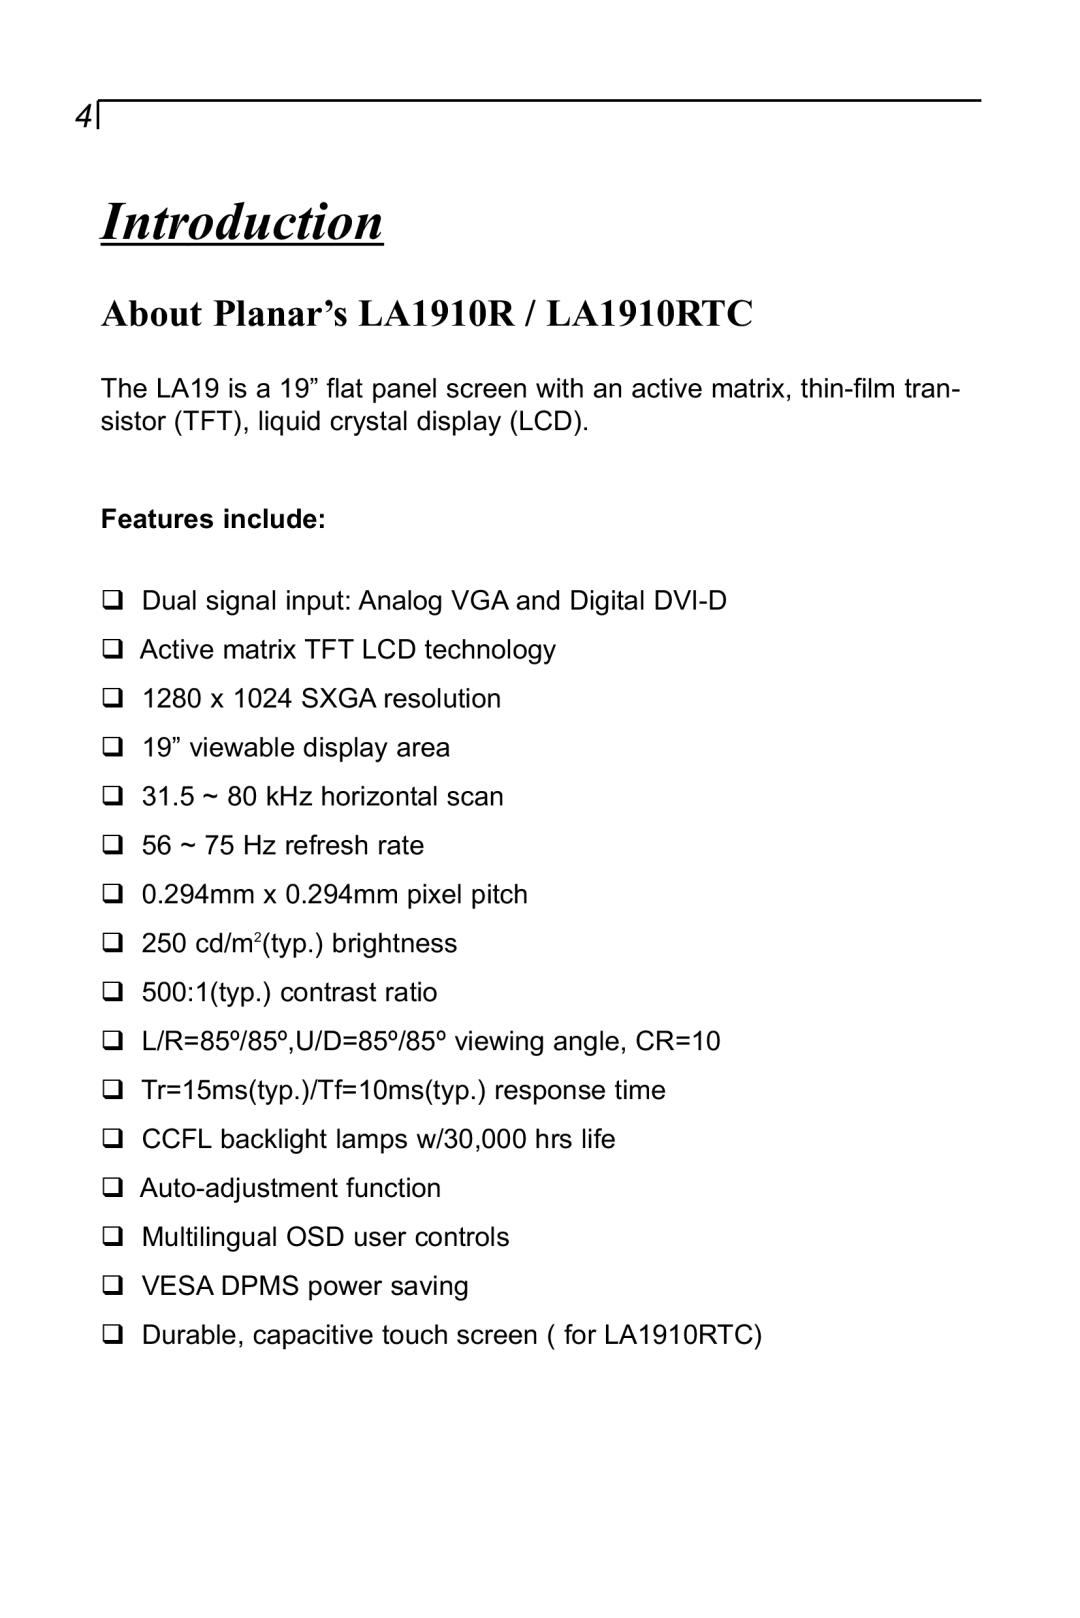 Planar manual Introduction, About Planar’s LA1910R / LA1910RTC, Features include 